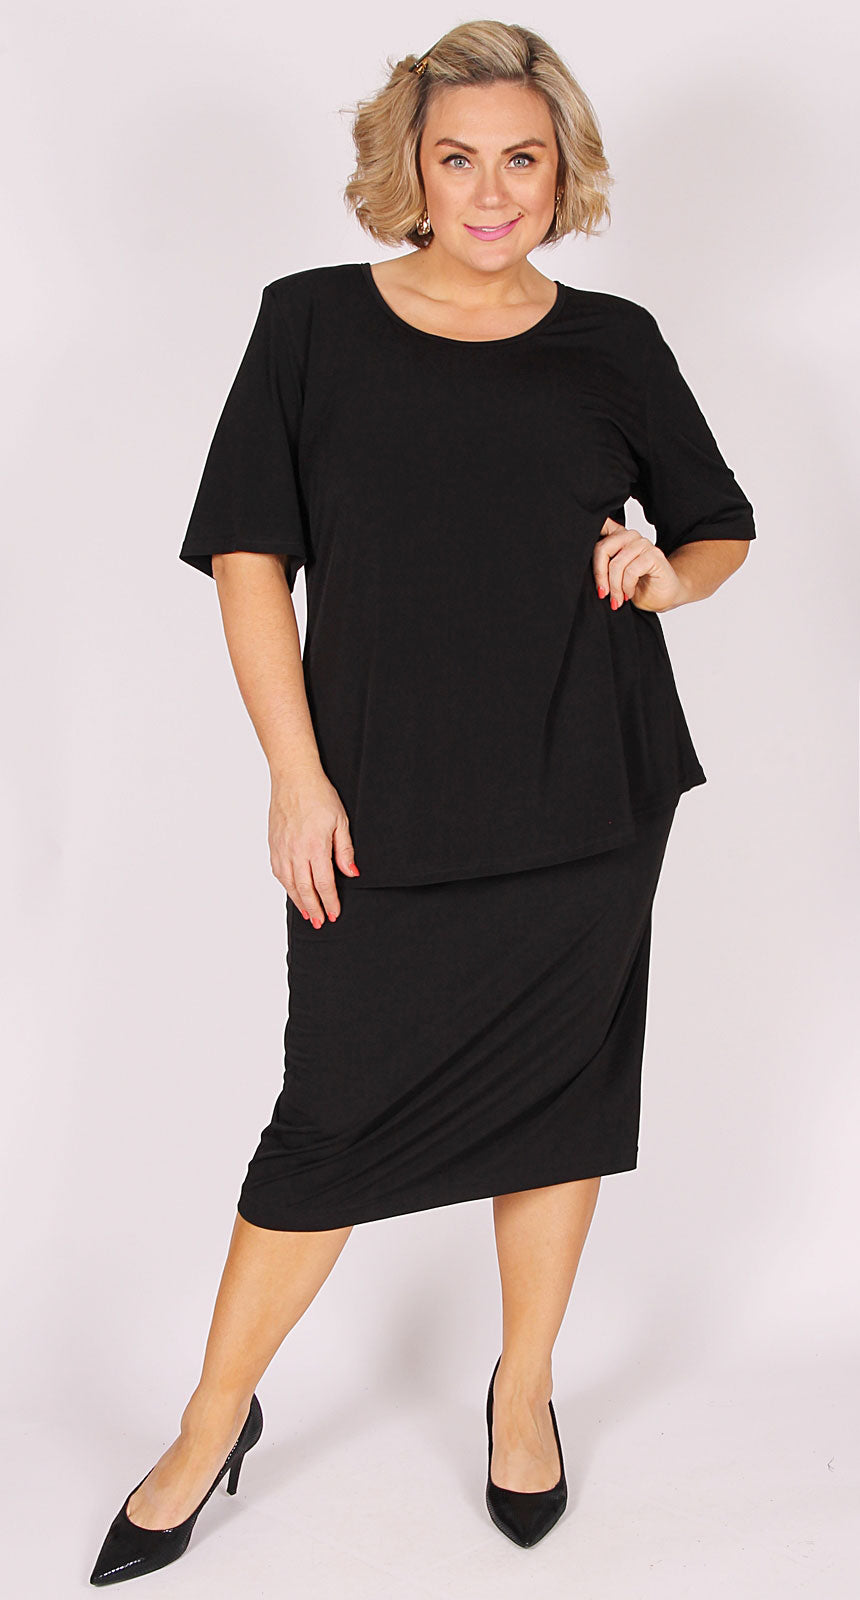 Lagos Mid-Length Knit Straight Skirt Black